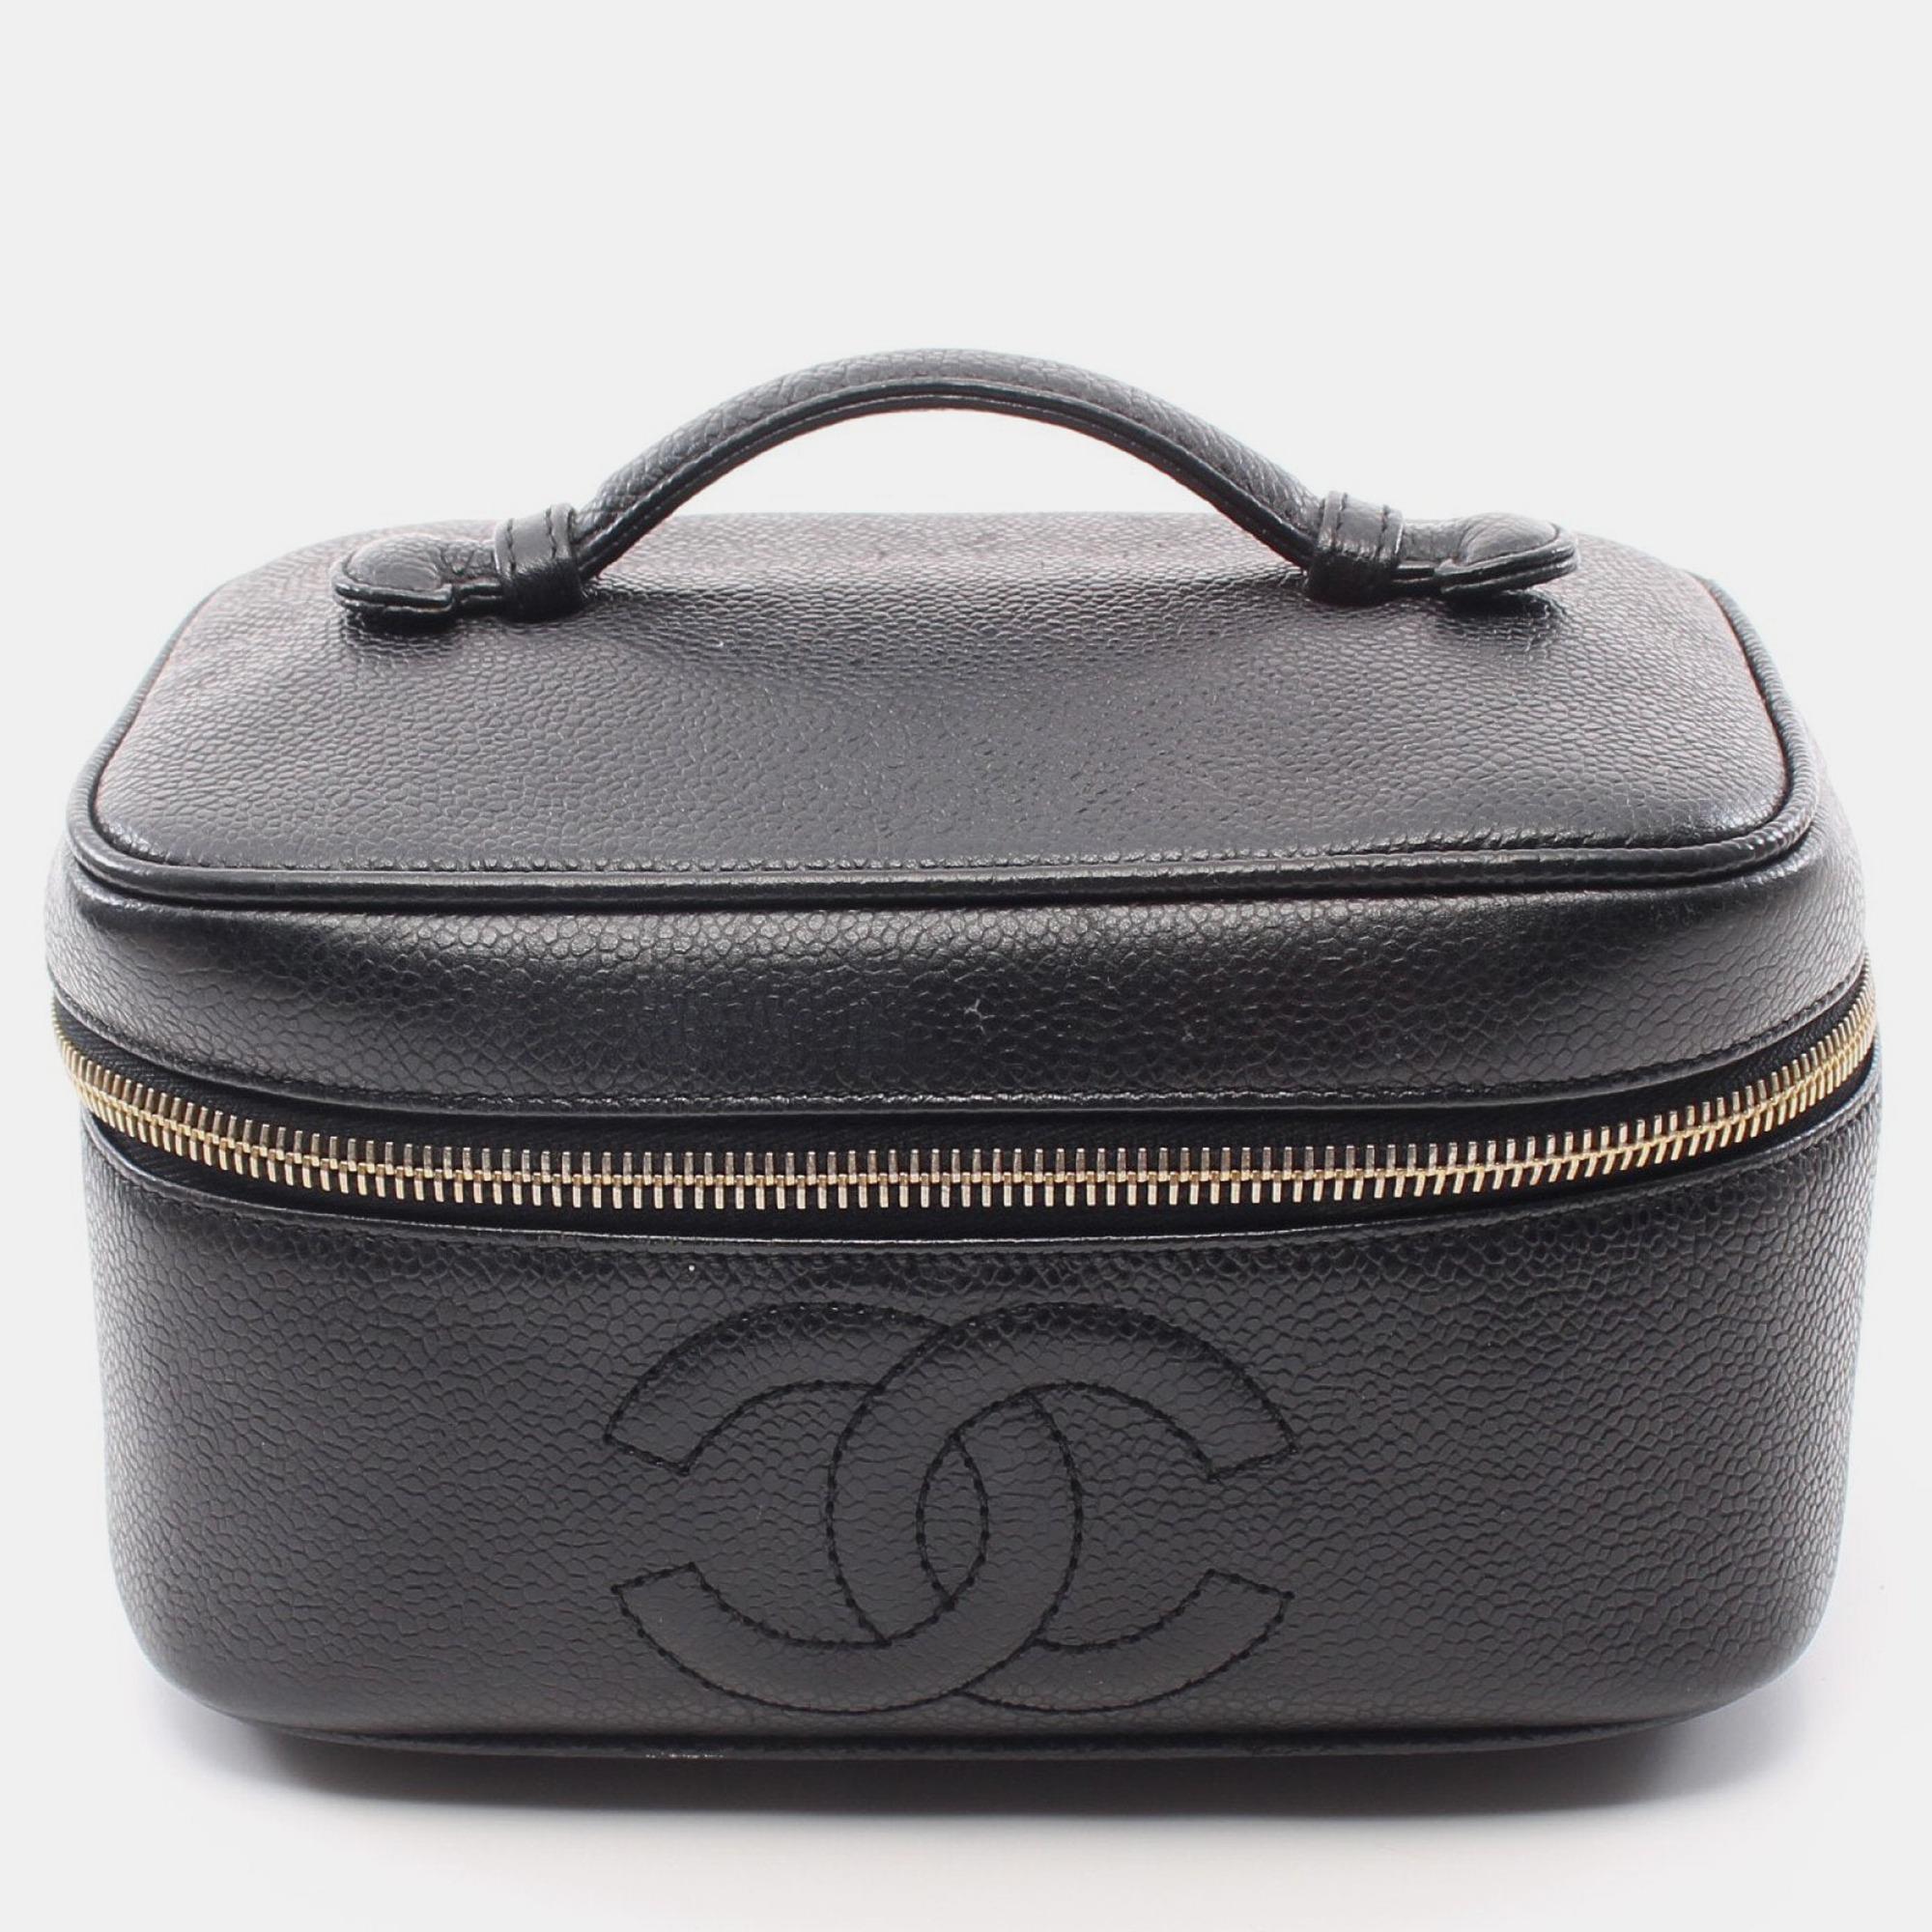 Chanel coco mark handbag vanity bag caviar skin black gold hardware